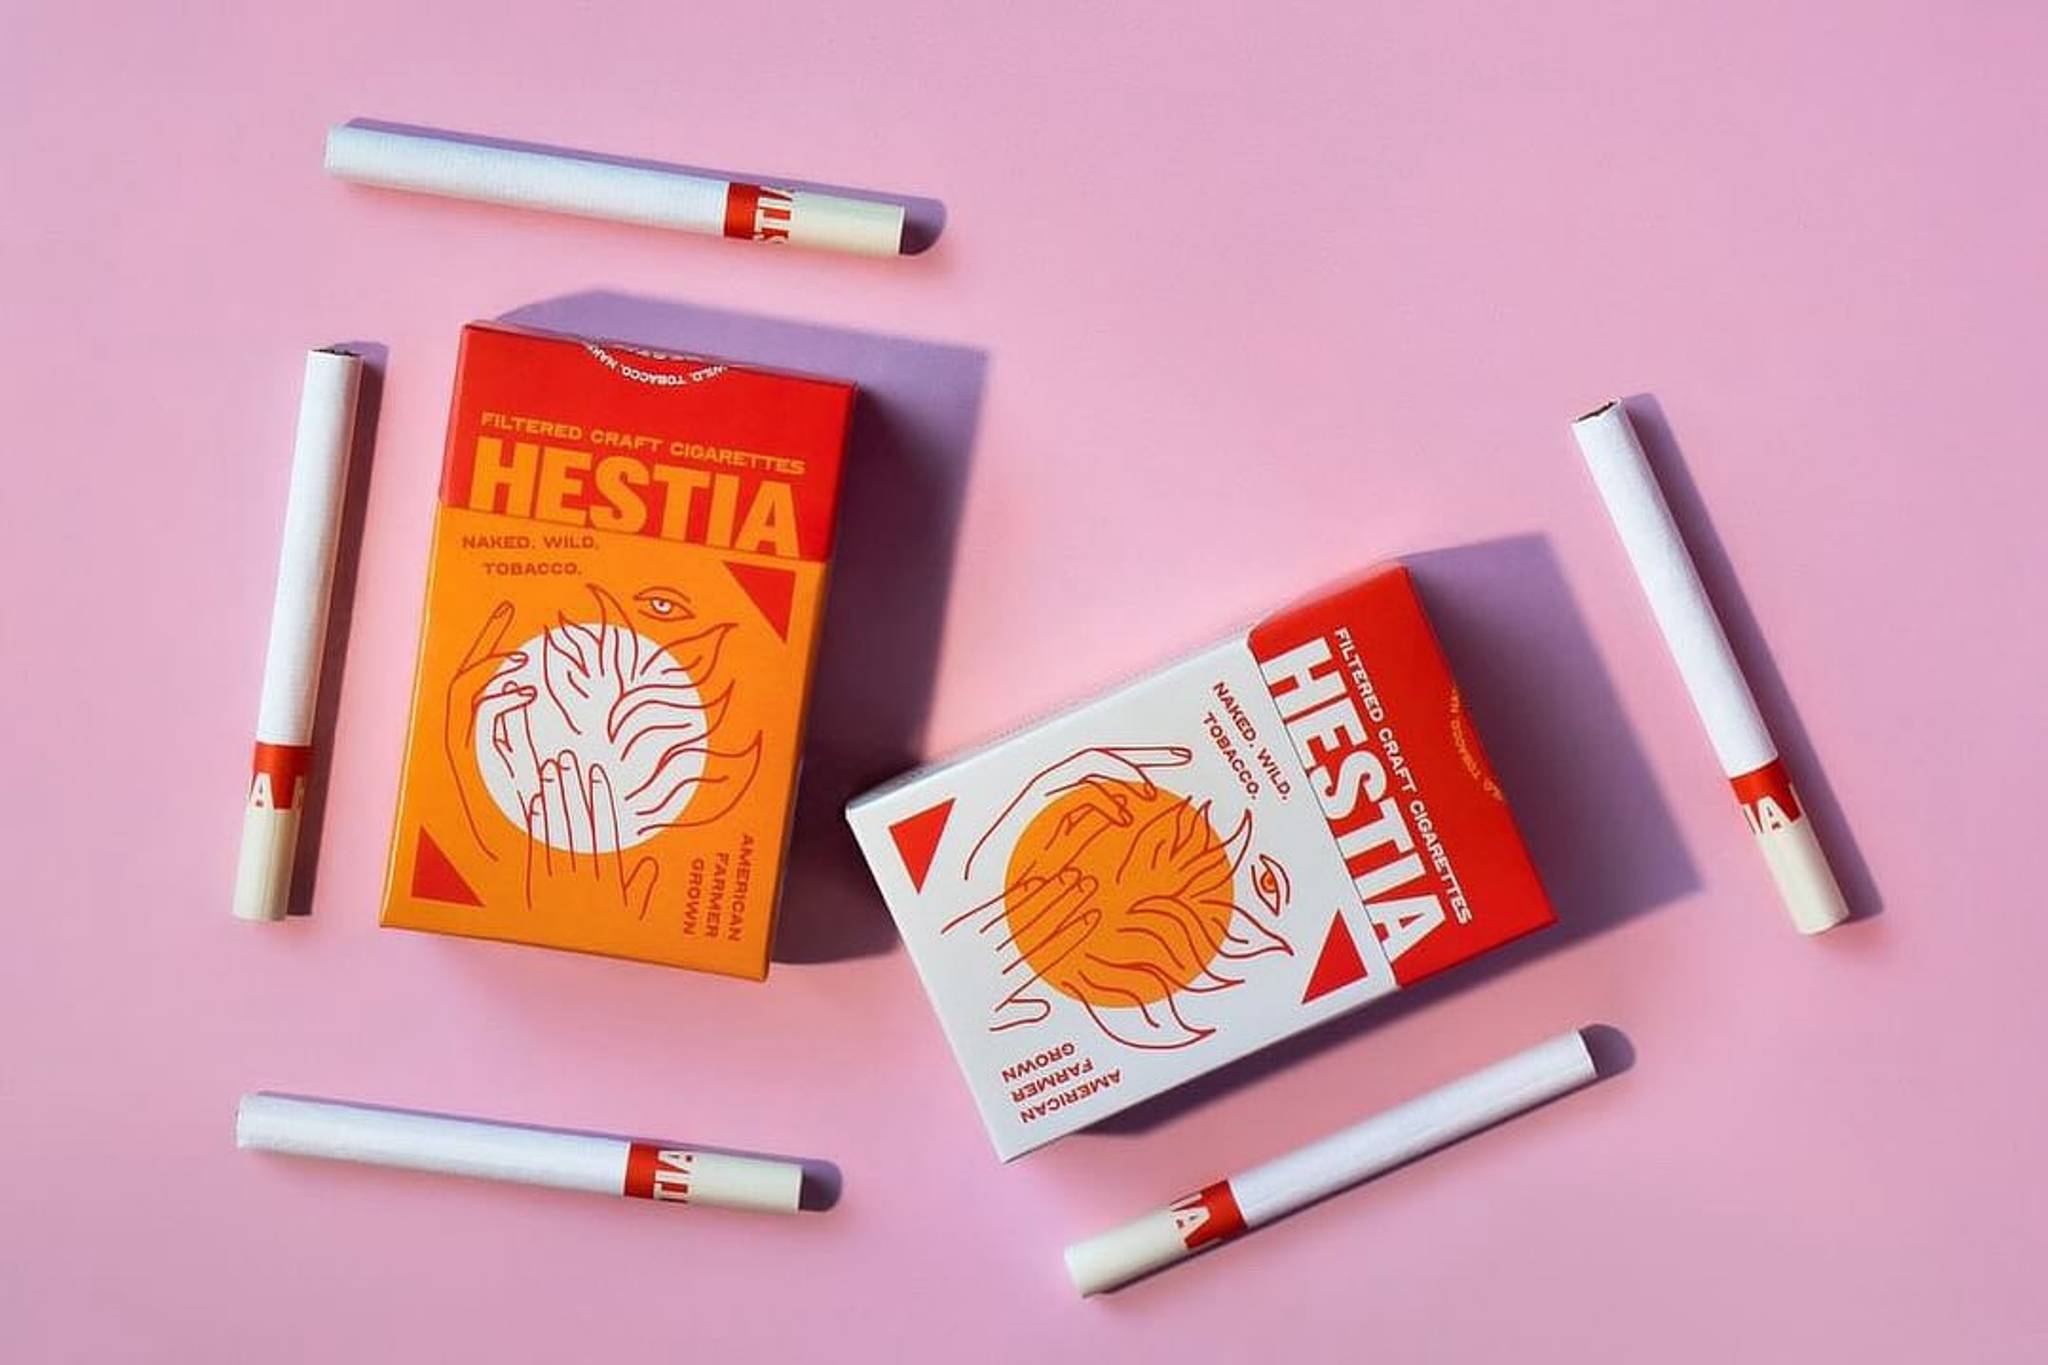 How Hestia became a cult brand among modern smokers